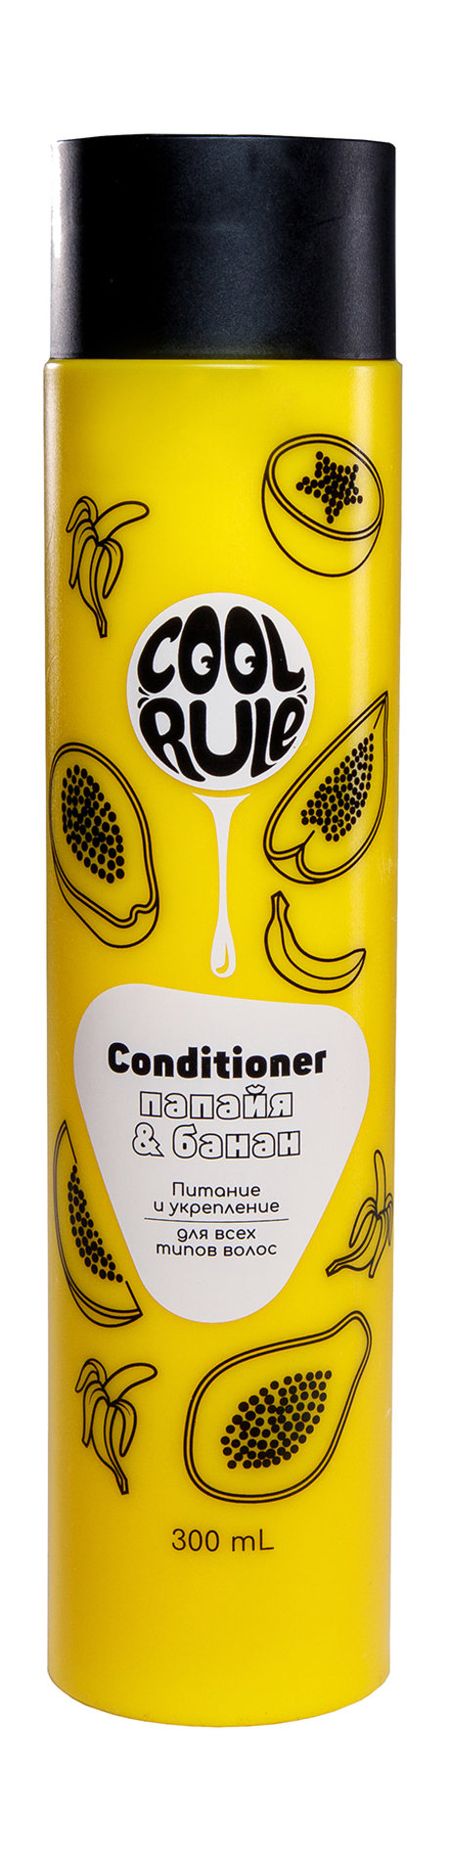 Cool Rule Папайя и банан Conditioner